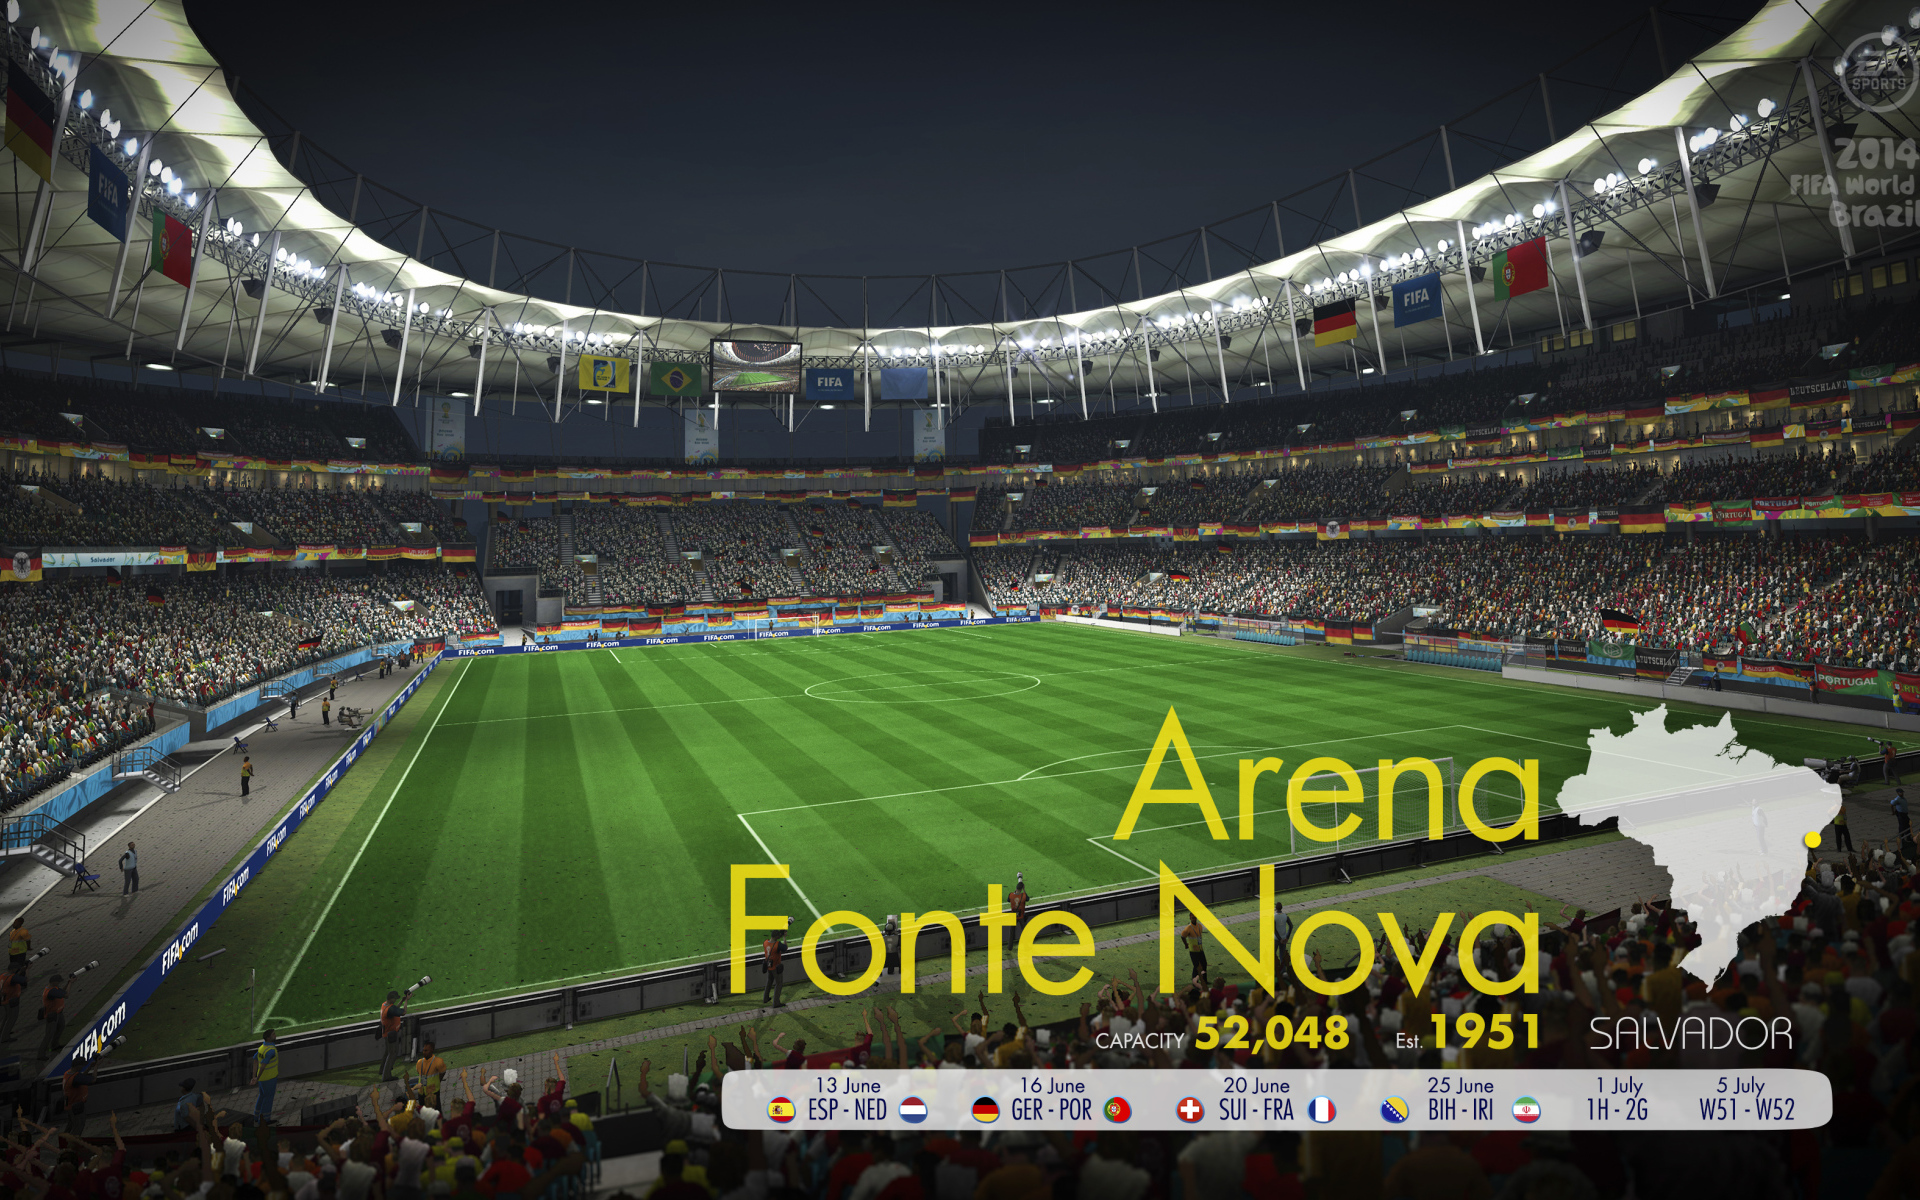 Arena Fonte Nova at the World Cup in Brazil 2014